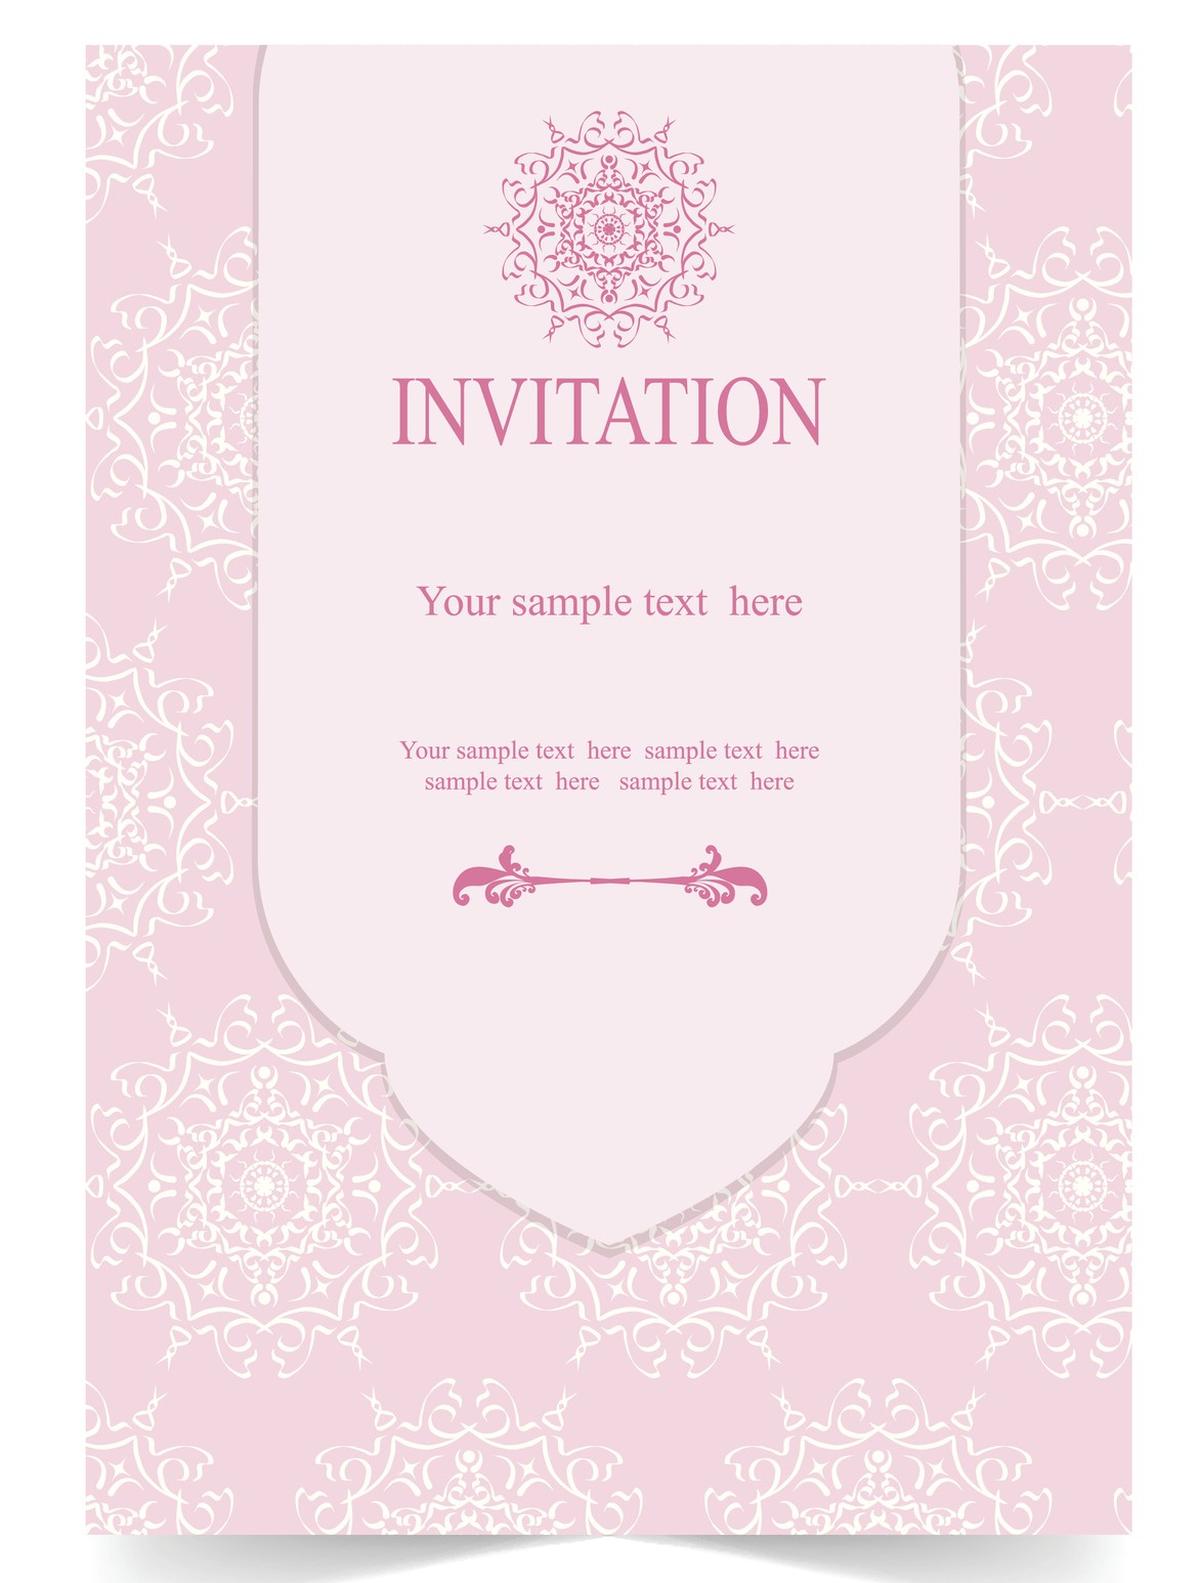 Wedding Invitation Card Quotes For Friends / Wedding Invitation